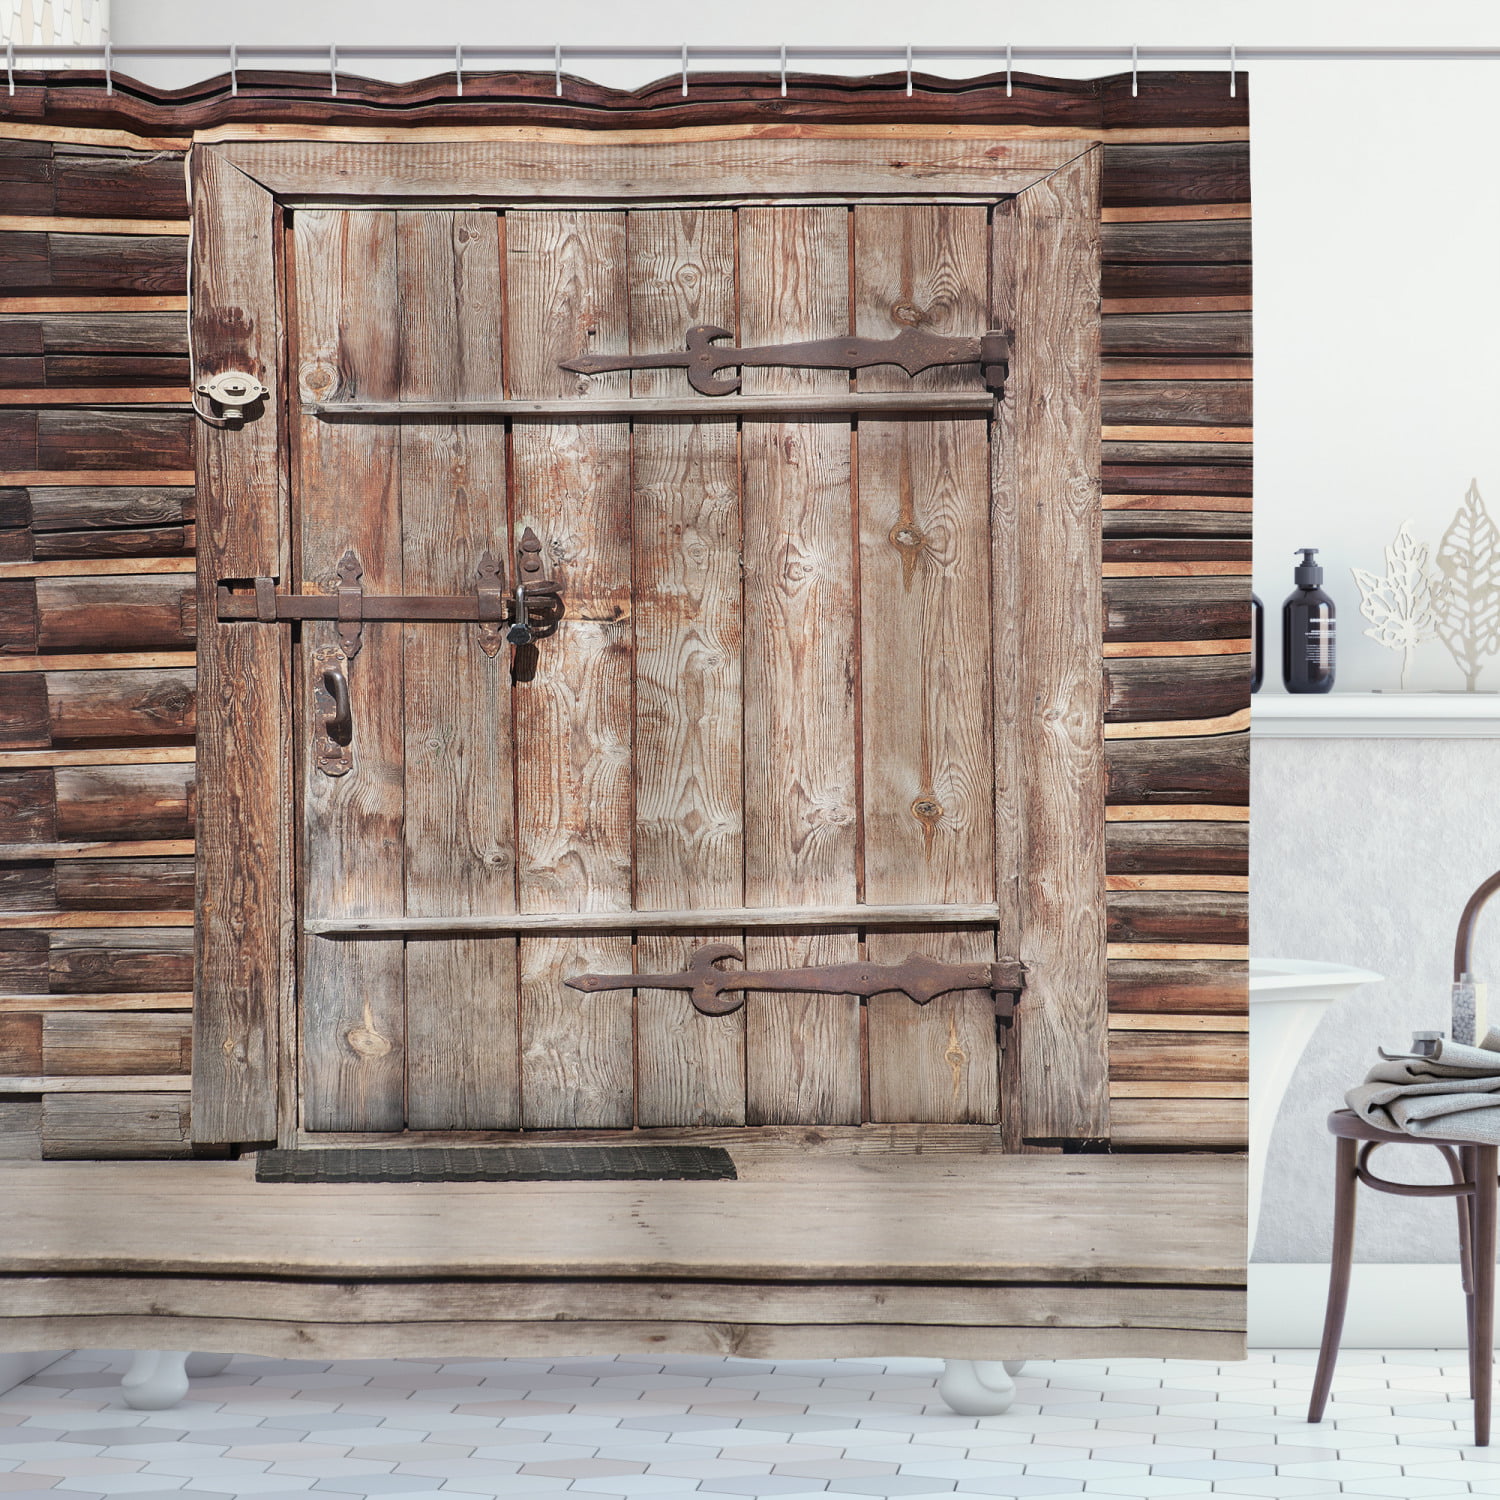 180CM Rustic Wooden Board Barn Door Waterproof Shower Curtain Bath Accessories 